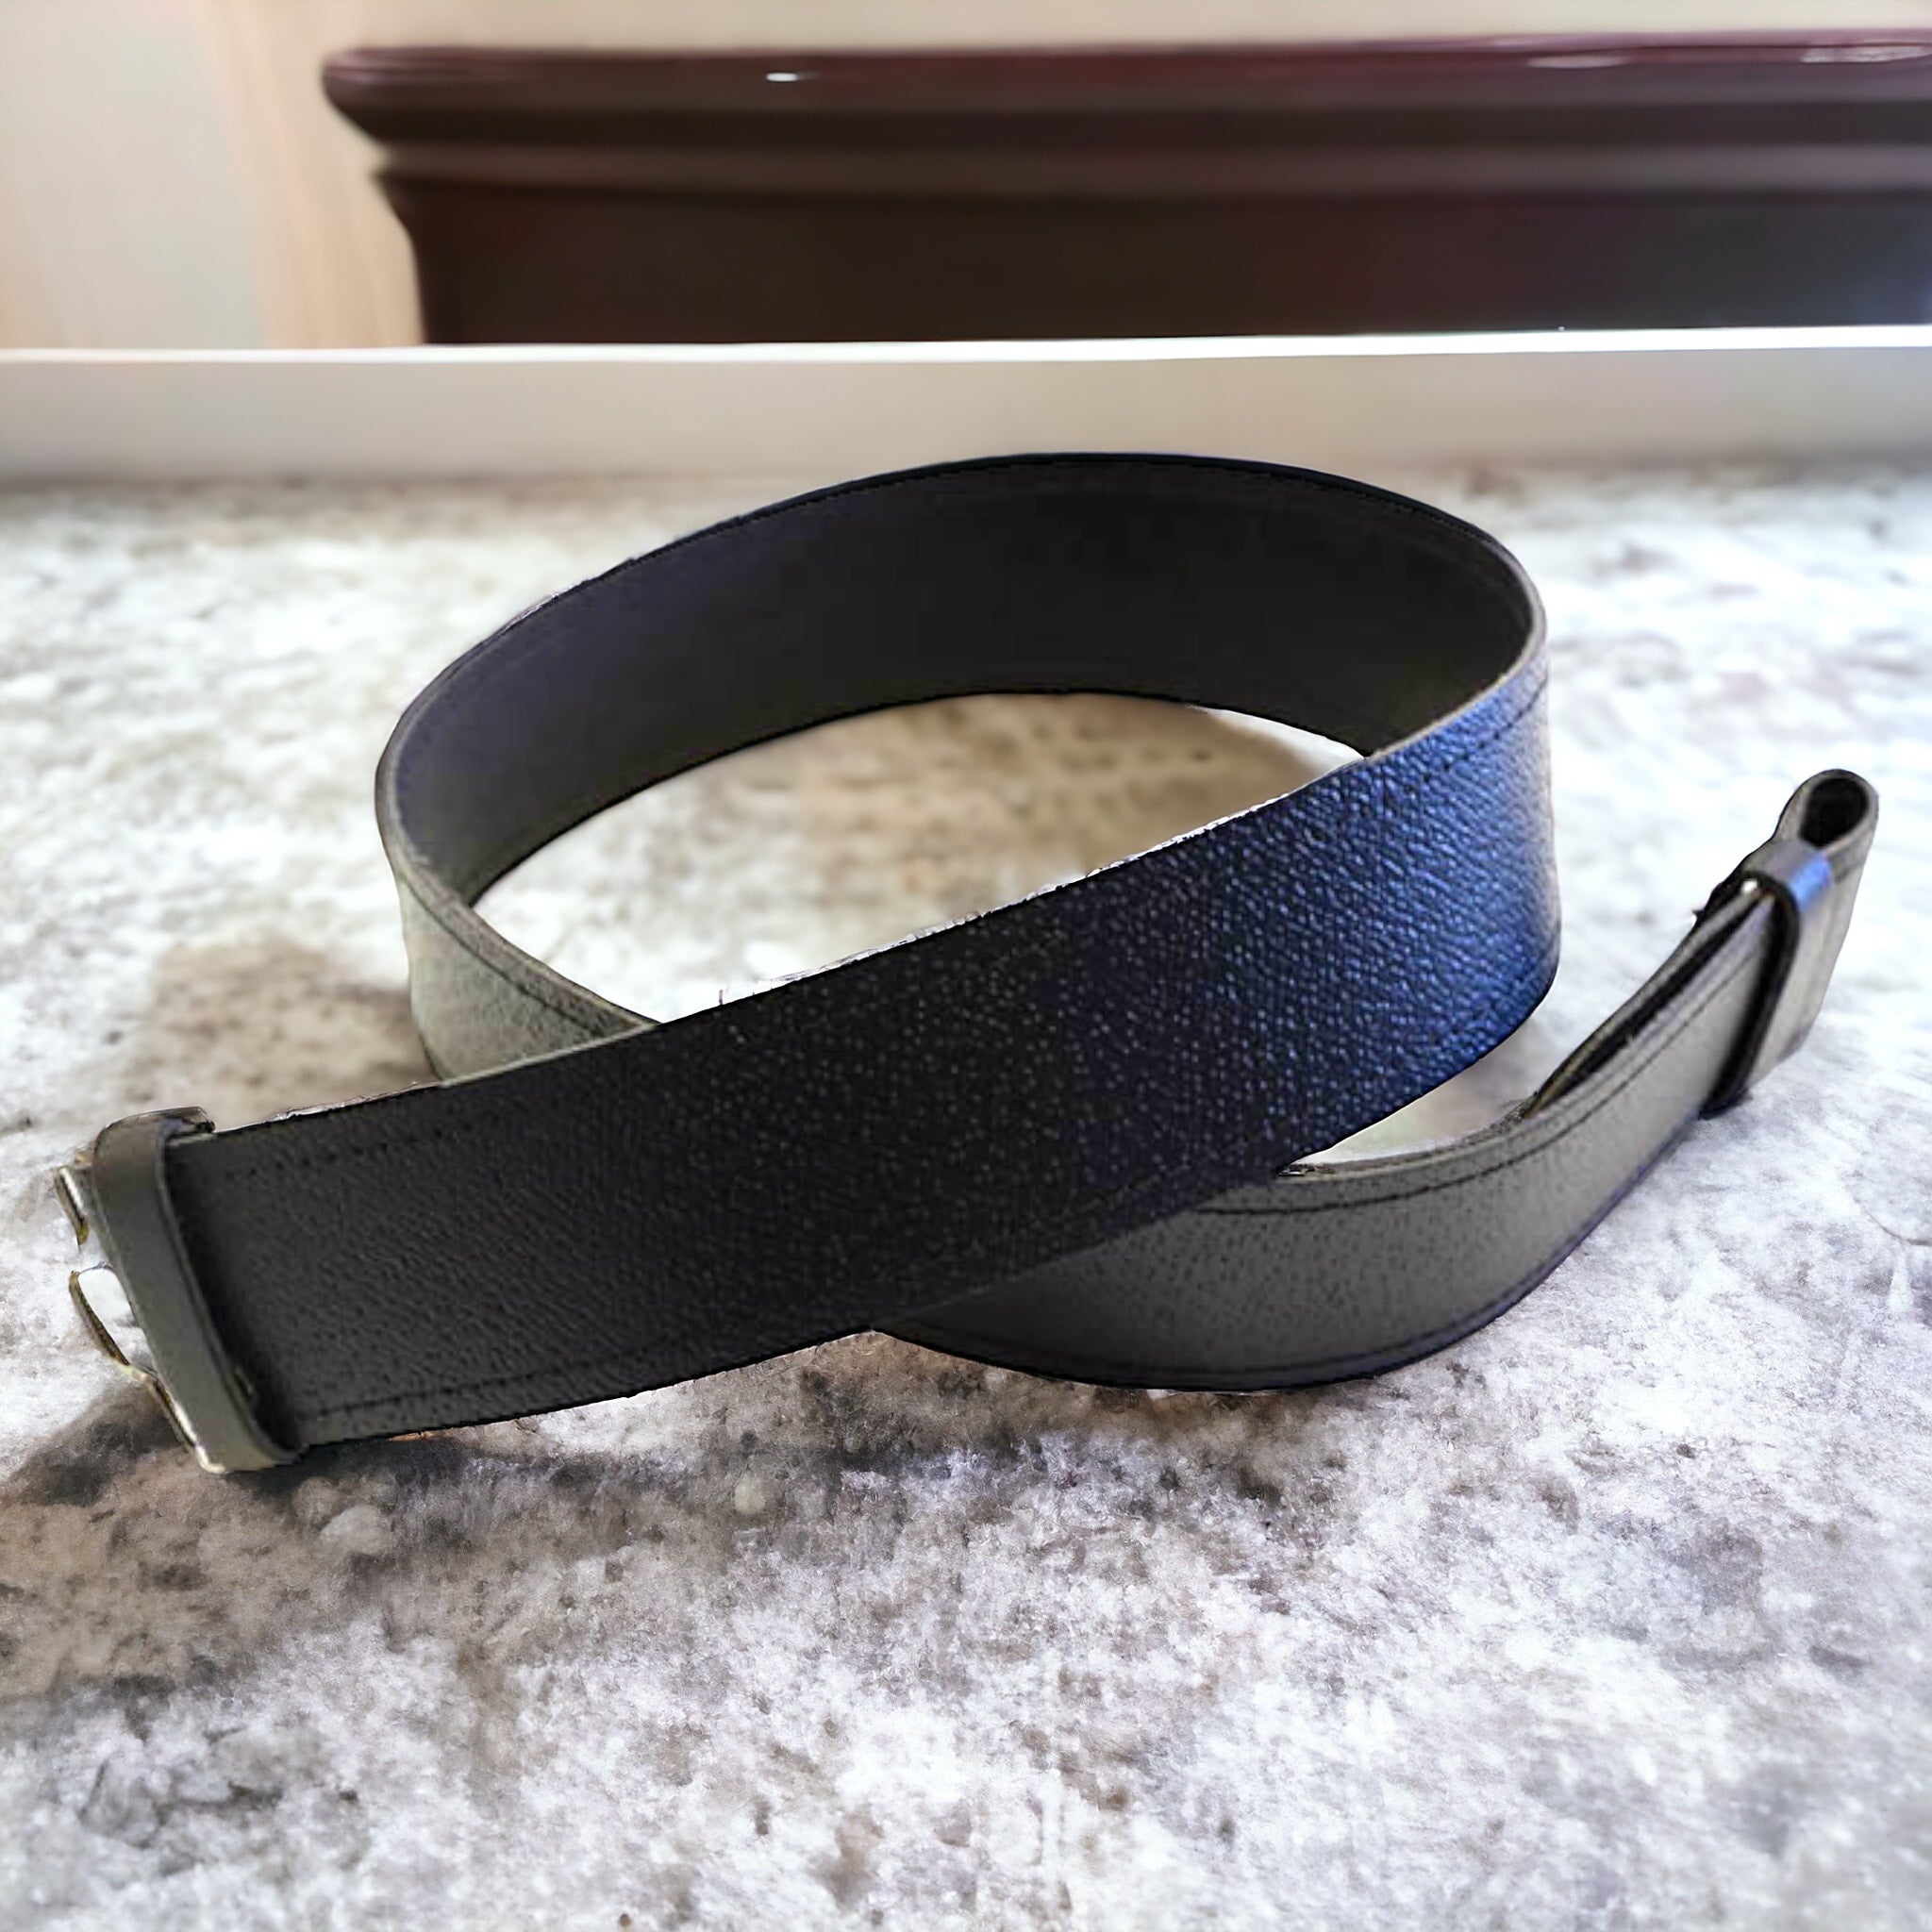 Adjustable Kilt Belt in leather with velcro